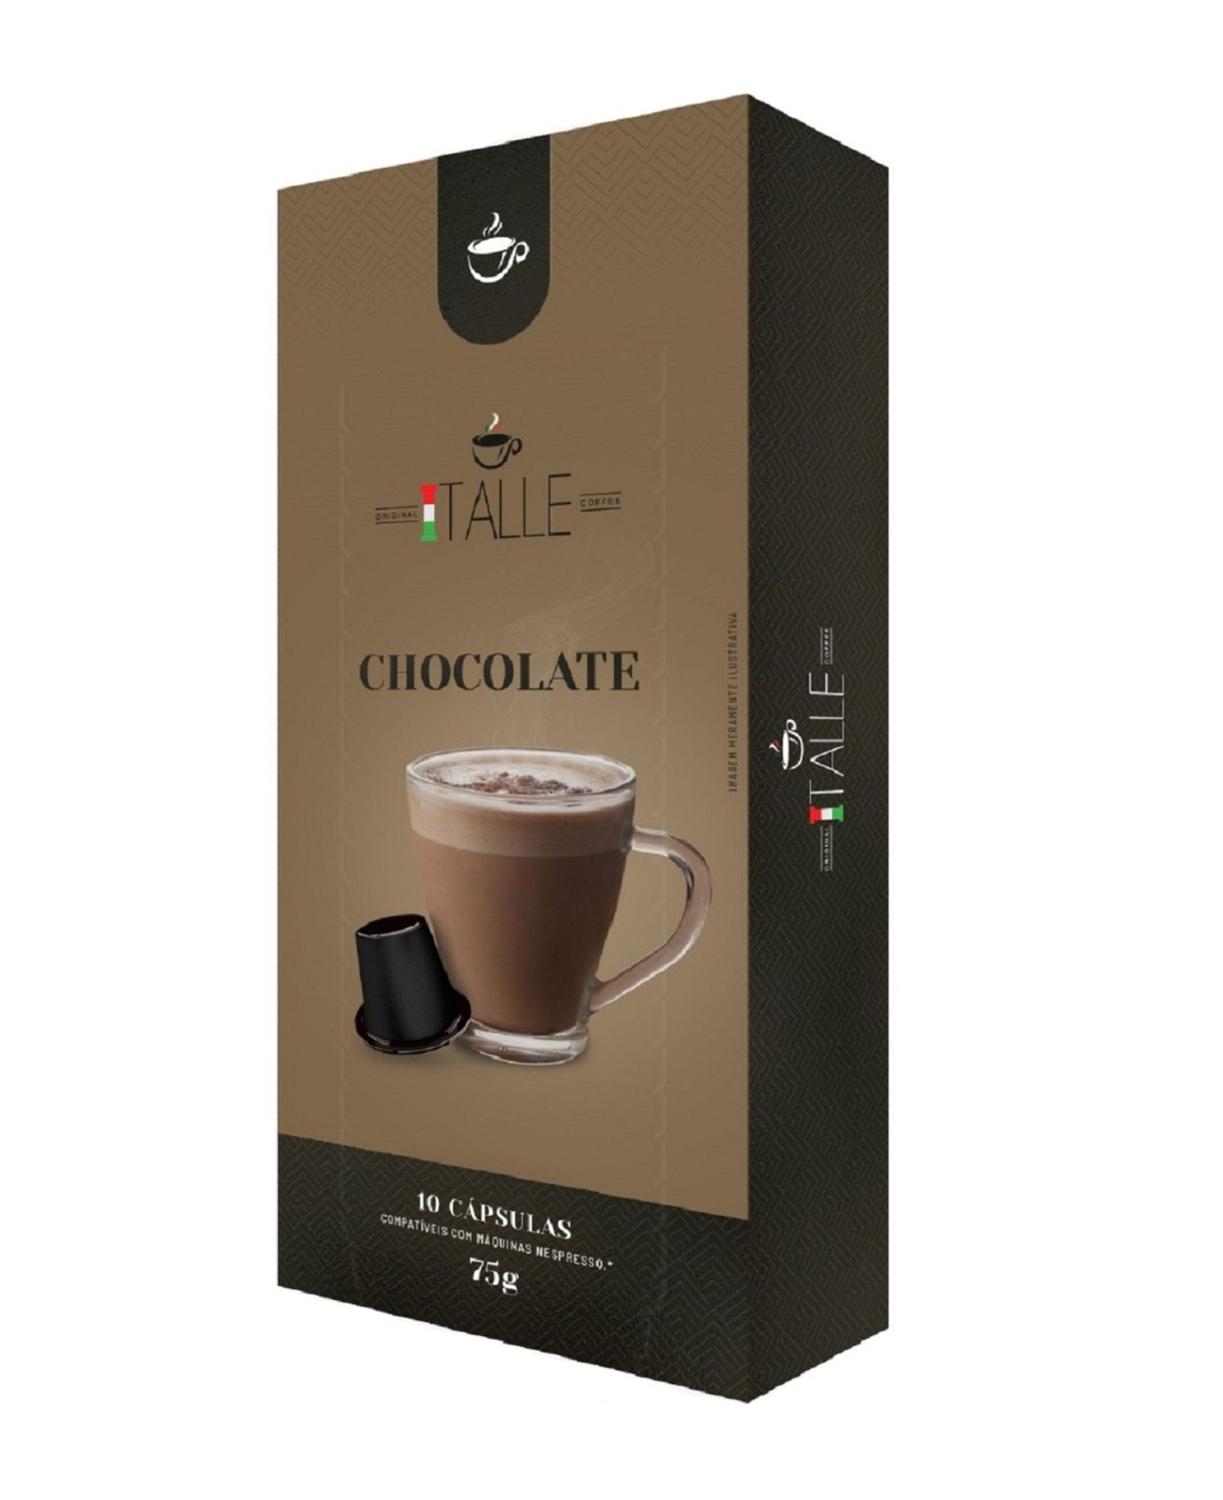 Capsula Chocolate Nespresso Cafe Italle 1 Und, Magalu Empresas